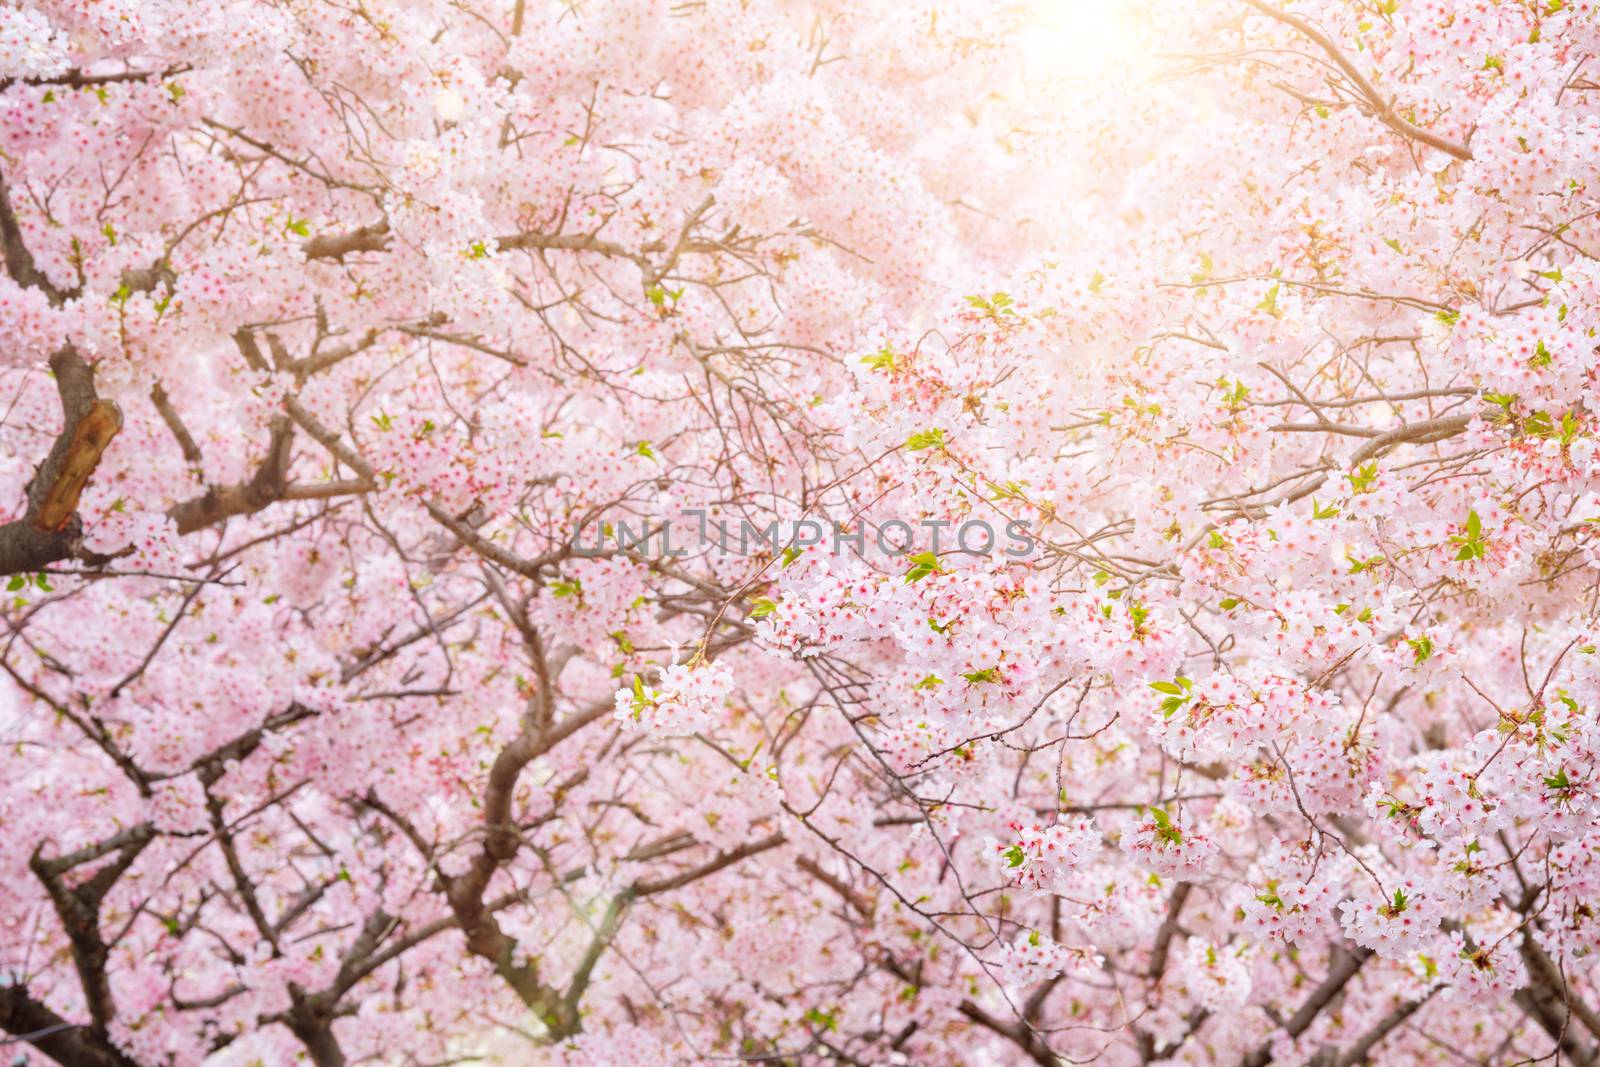 Blooming sakura cherry blossom by dimol